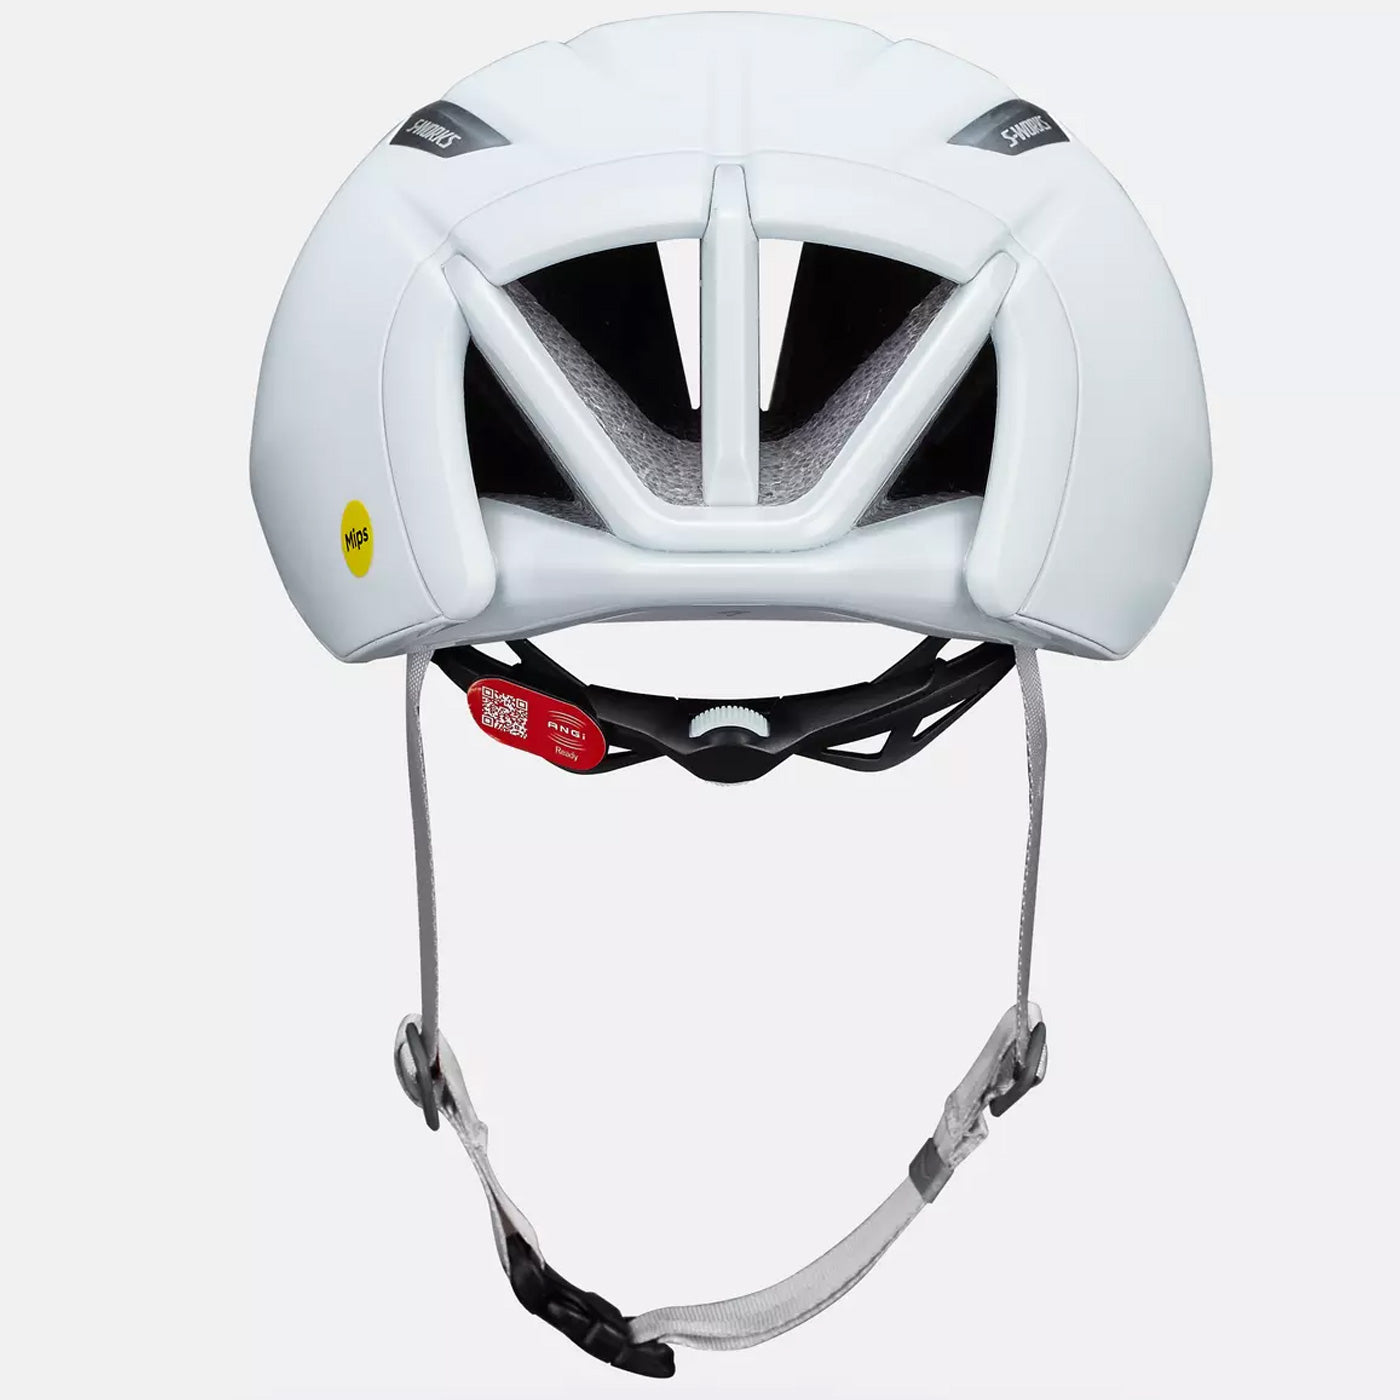 Specialized Evade 3 helmet - White